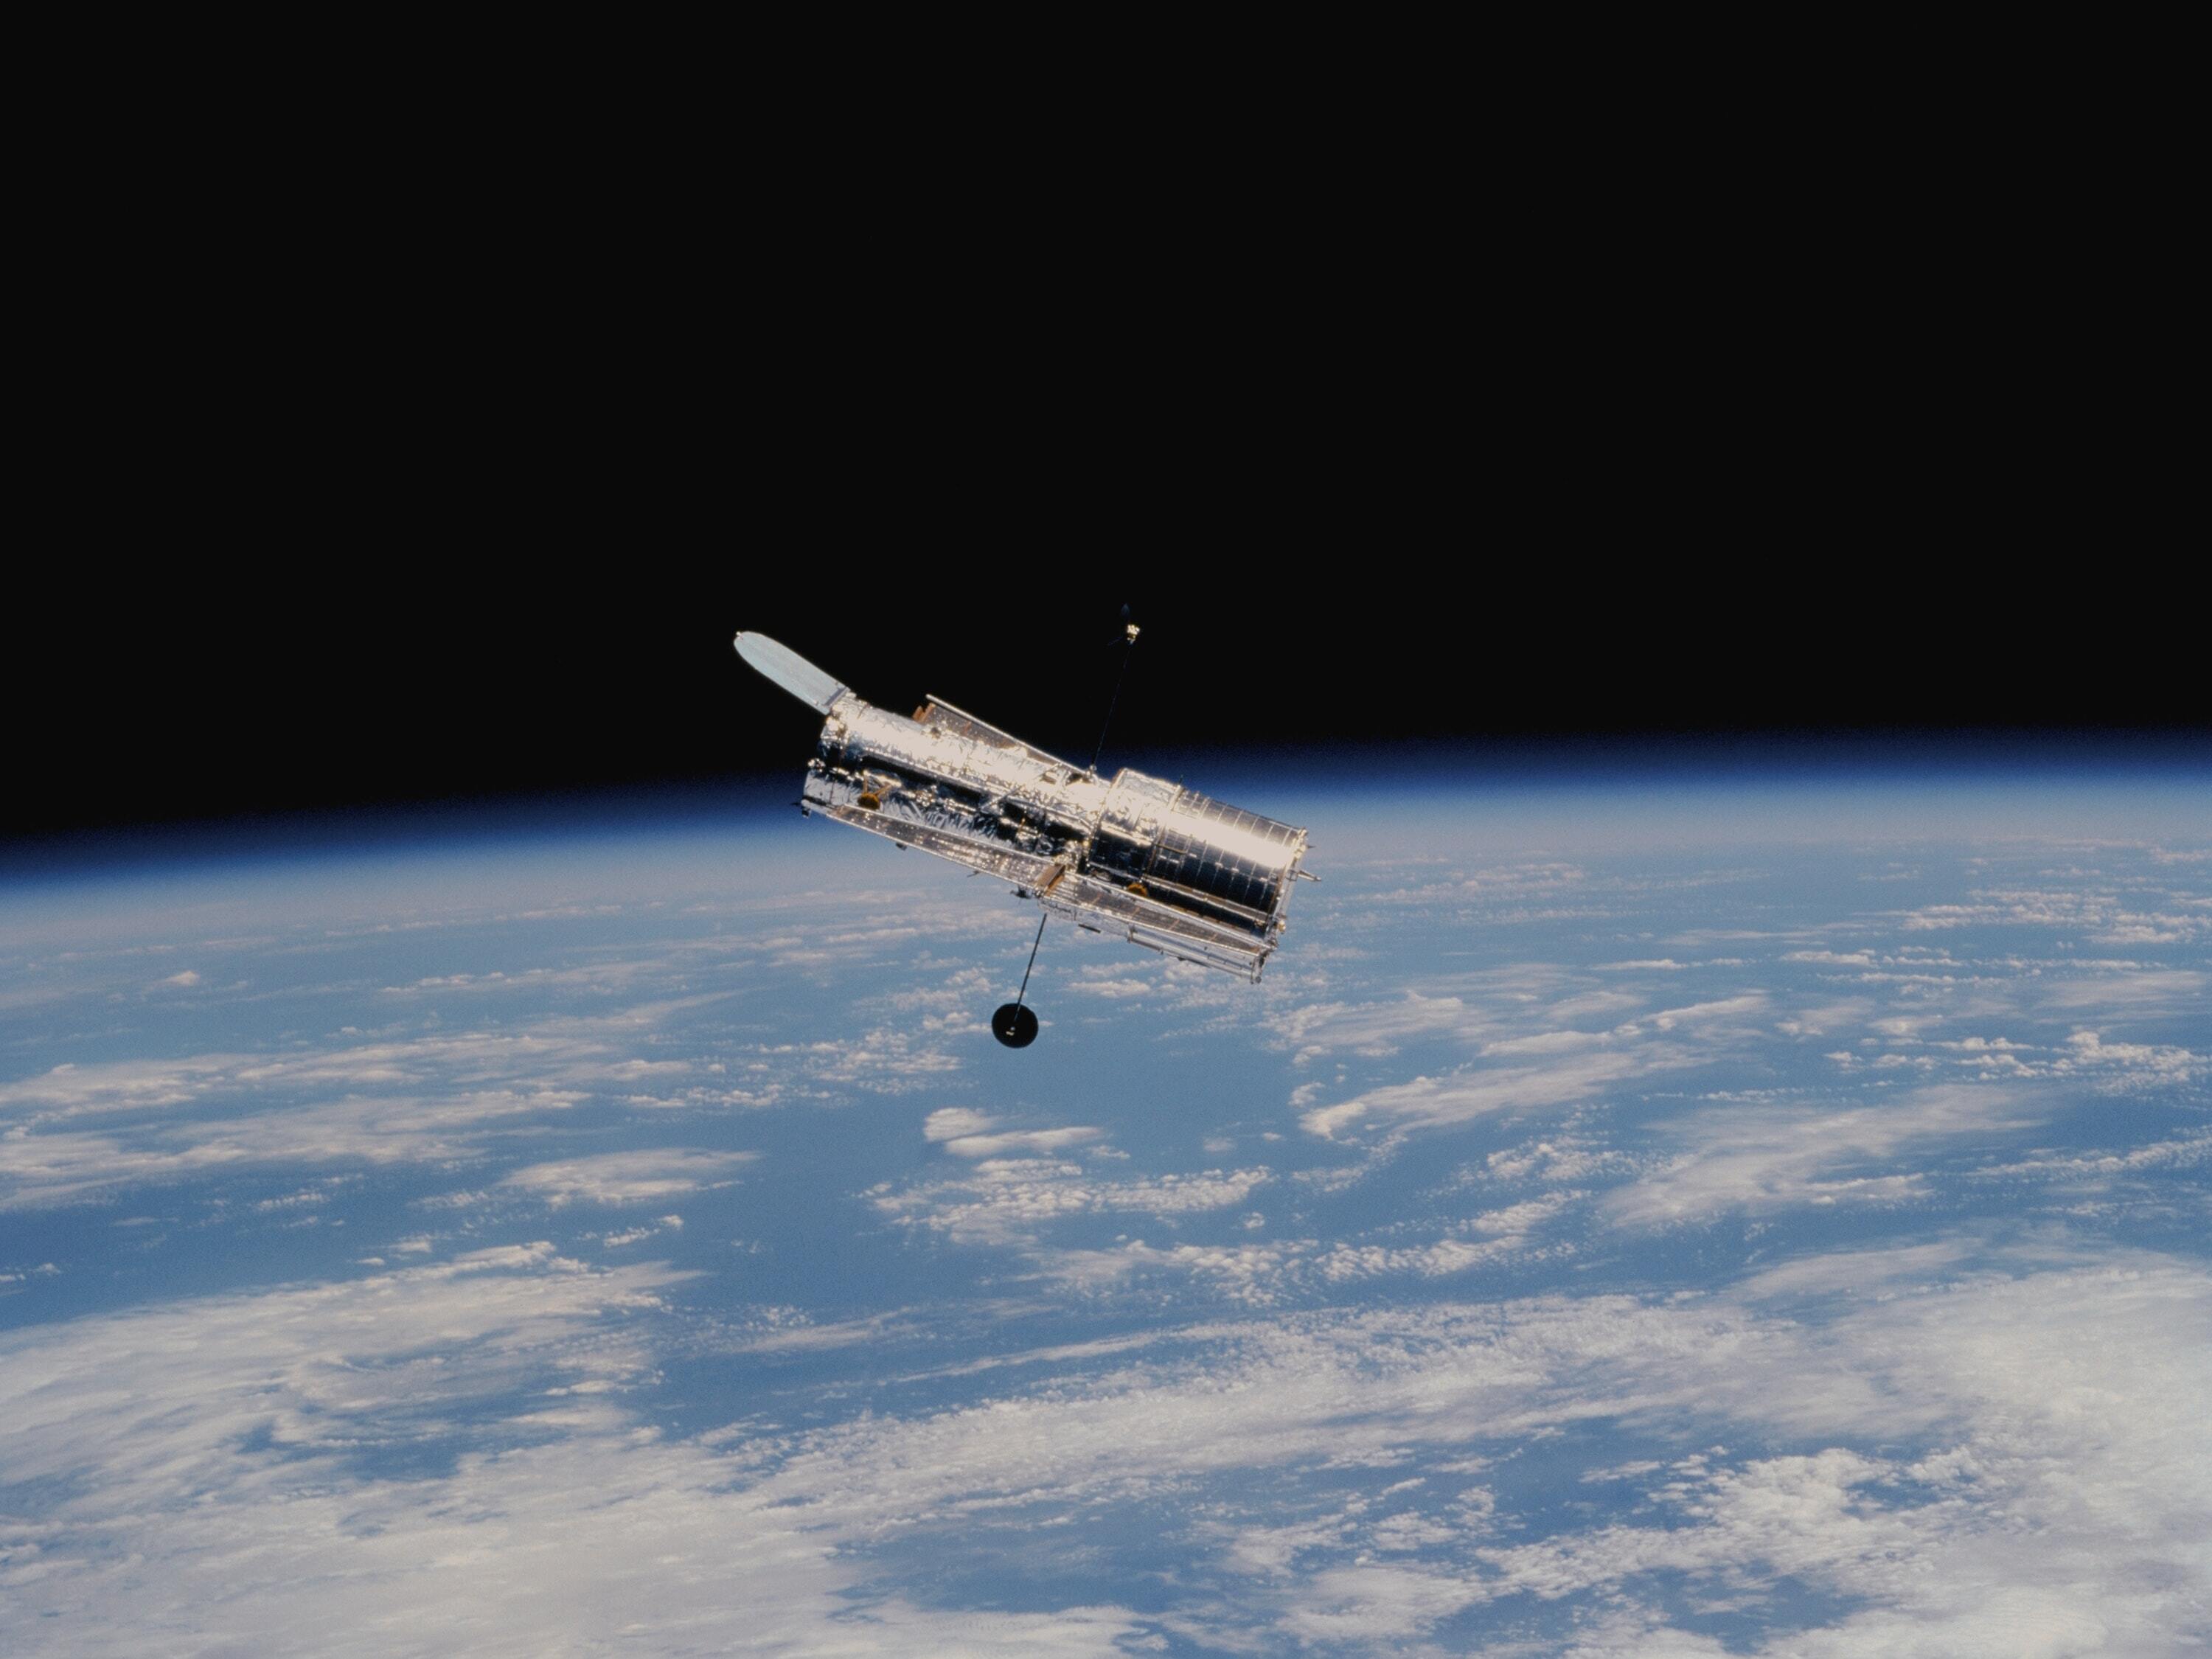 32-летний телескоп Хаббл переведут на новую орбиту